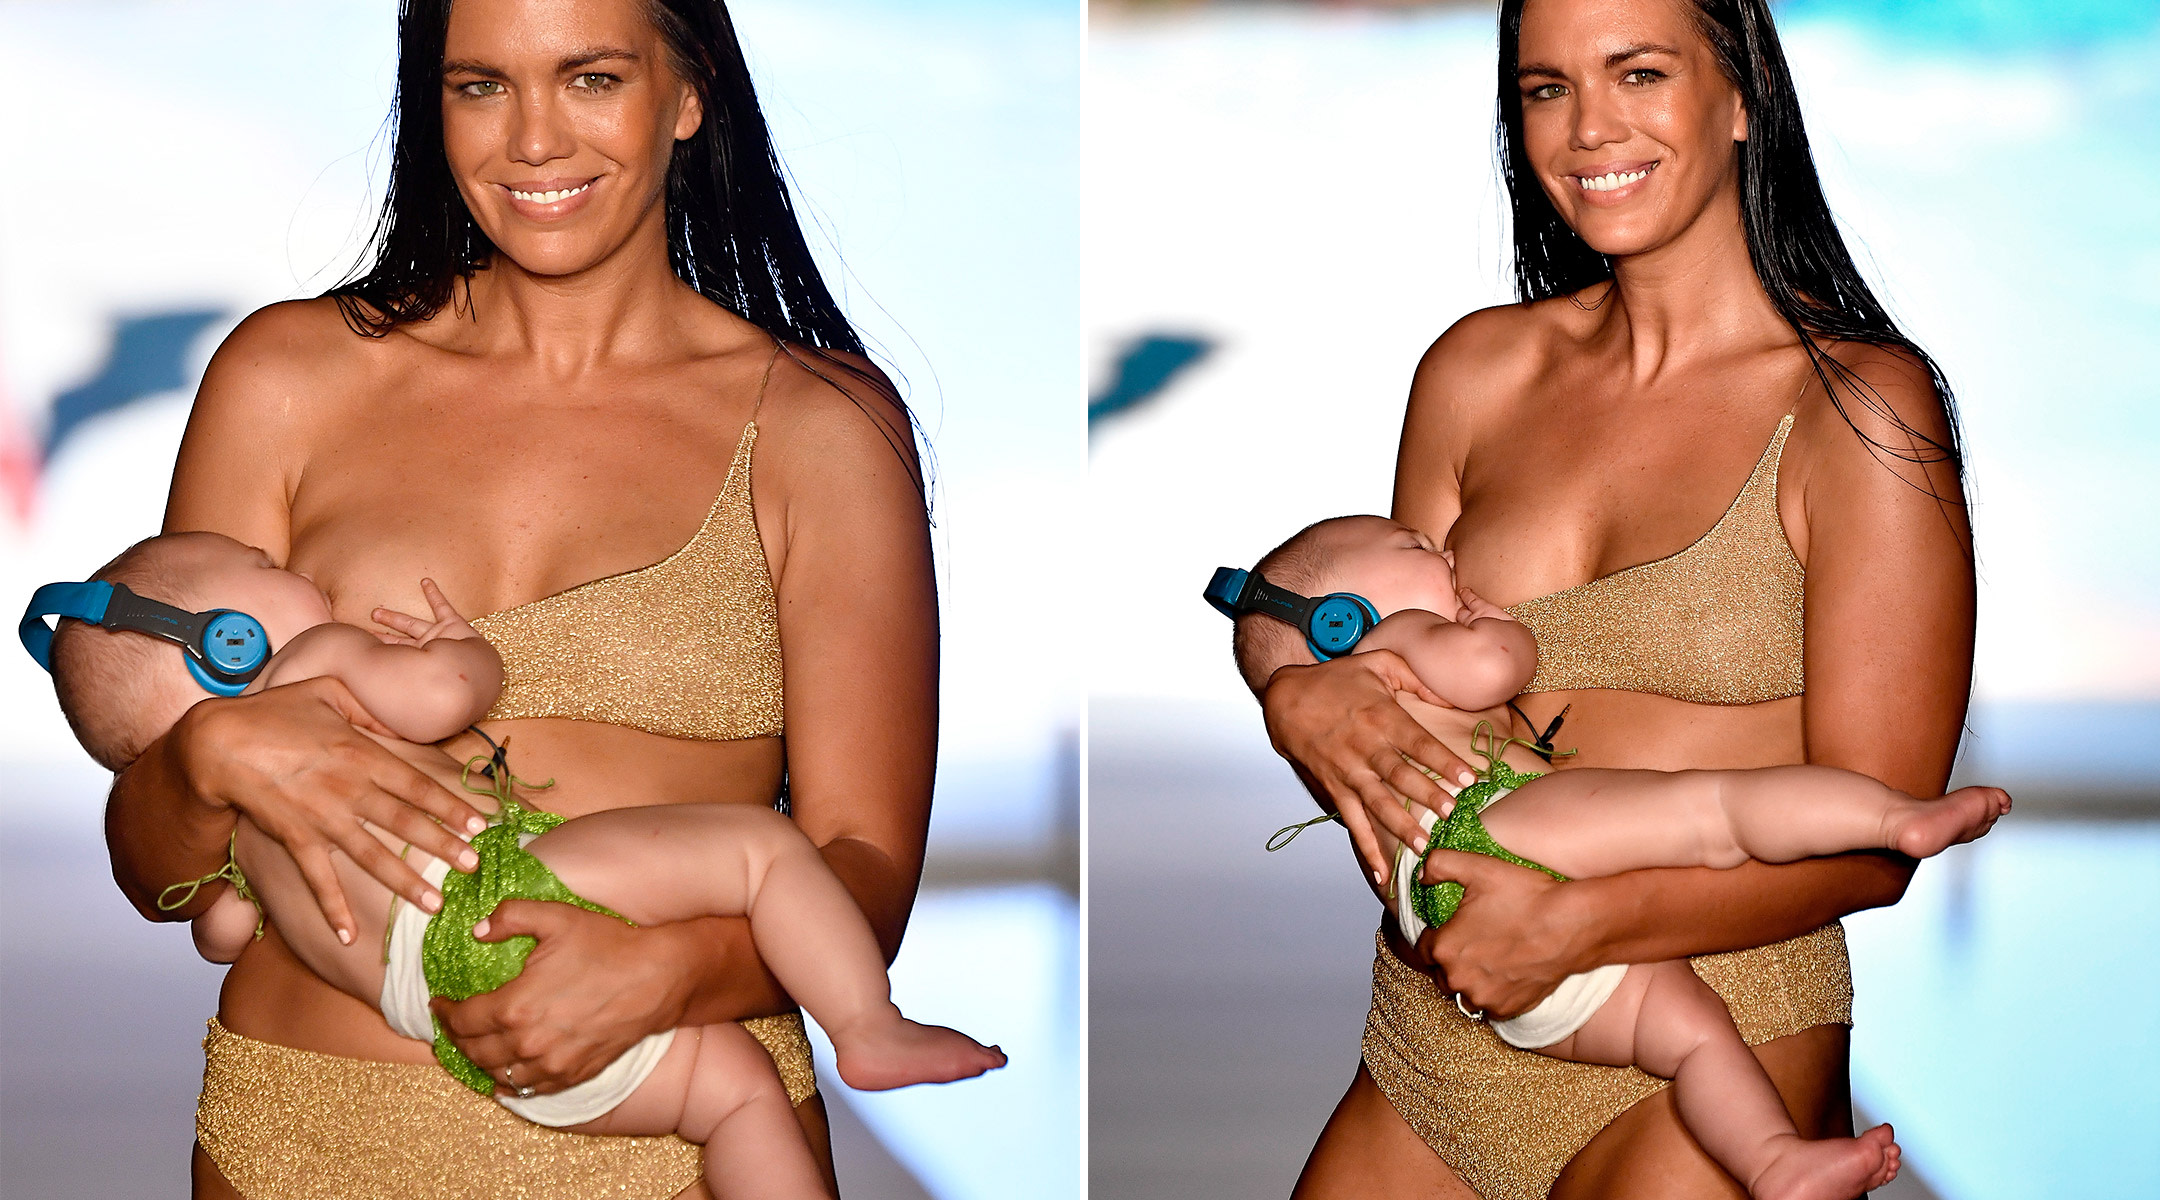 sports illustrated model mara martin, walking the runway while breastfeeding her baby